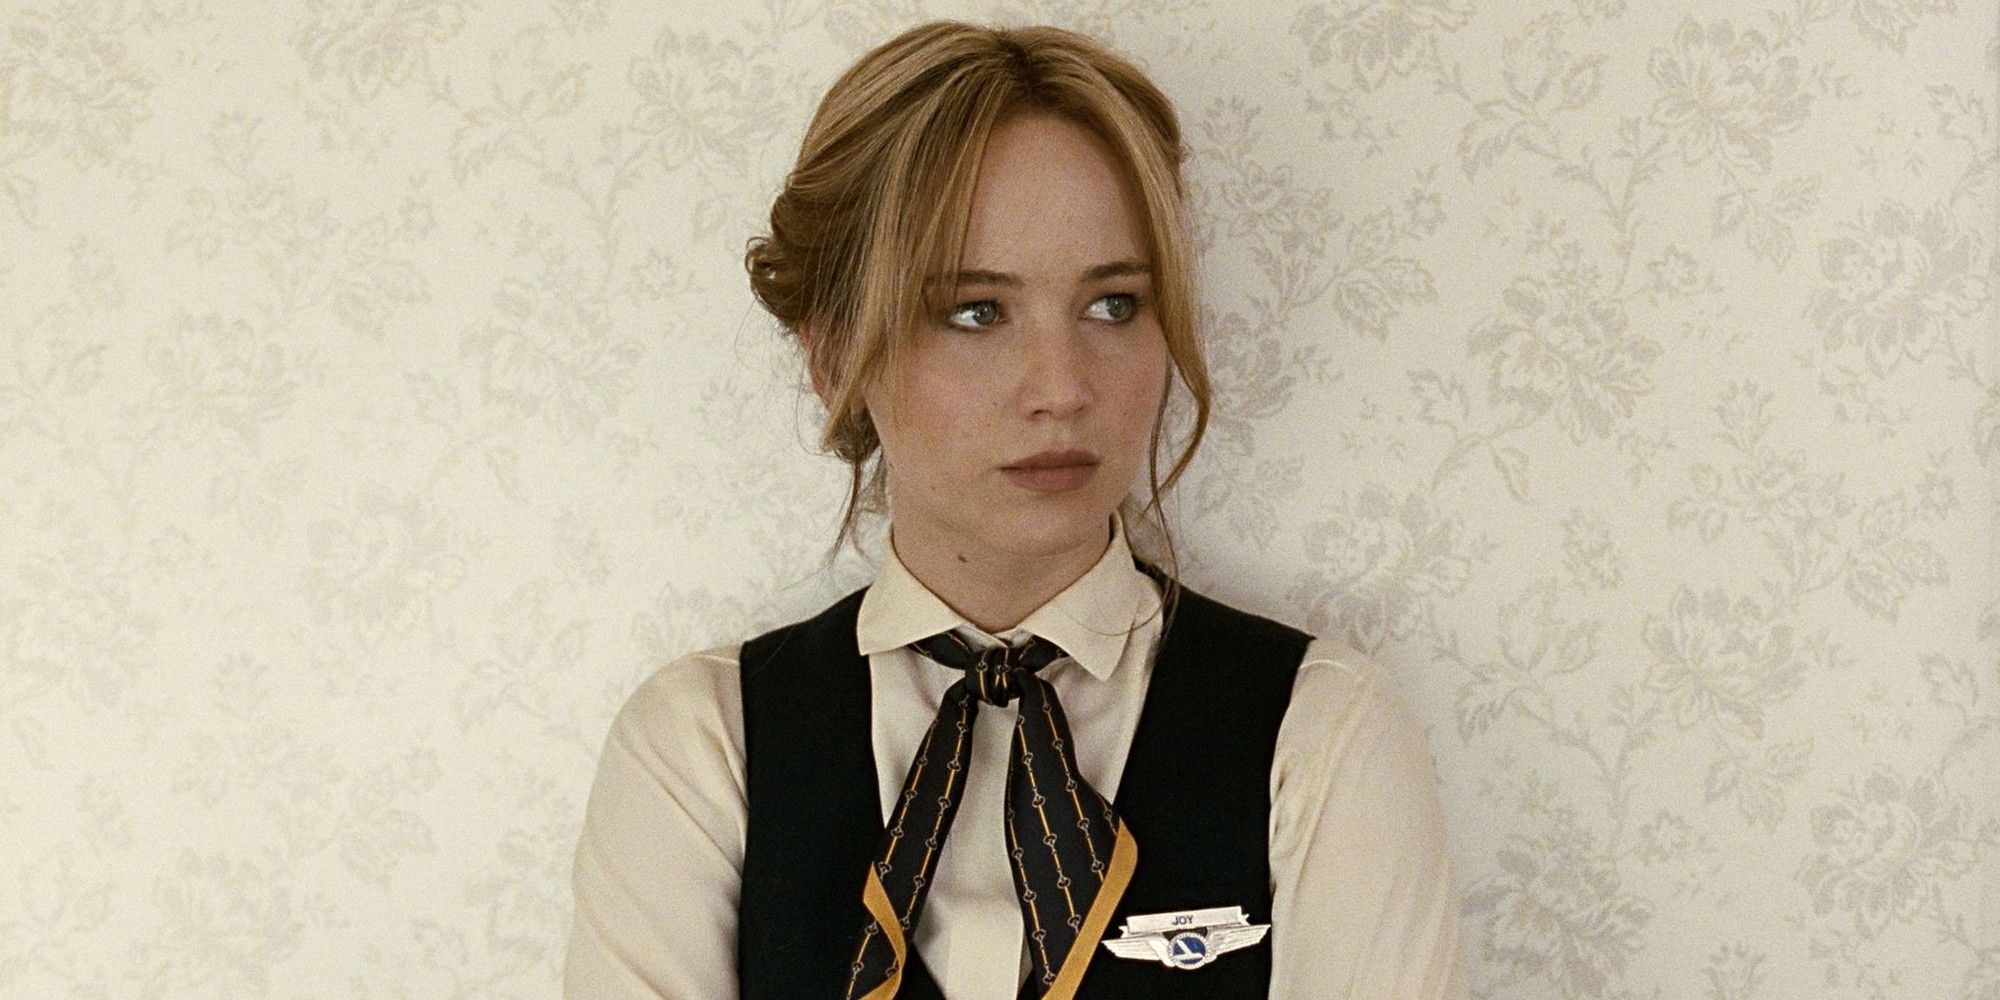 Jennifer Lawrence's New Movie Role Breaks A 9-Year Streak After Last Oscar-Nominated Performance